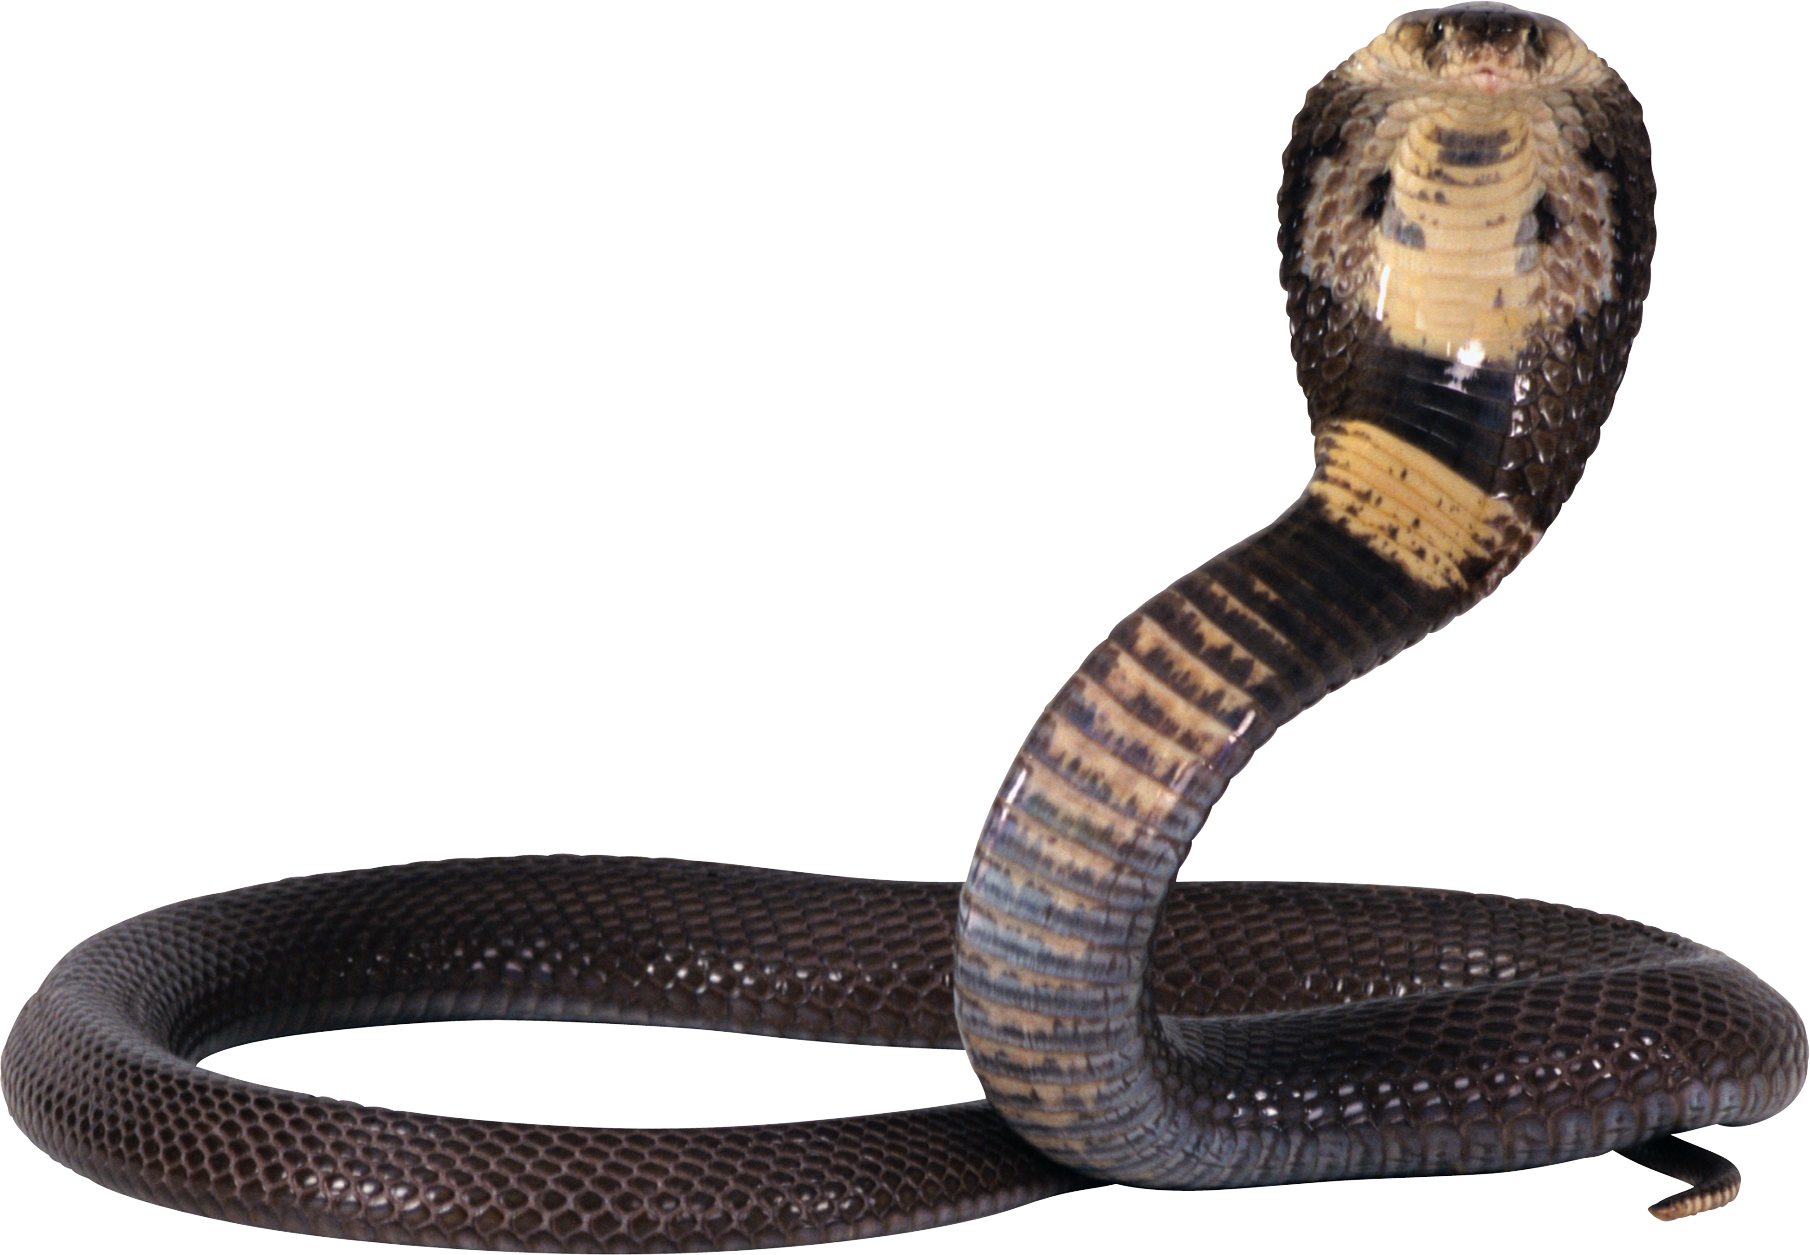 Cobra Snake Hd PNG Image